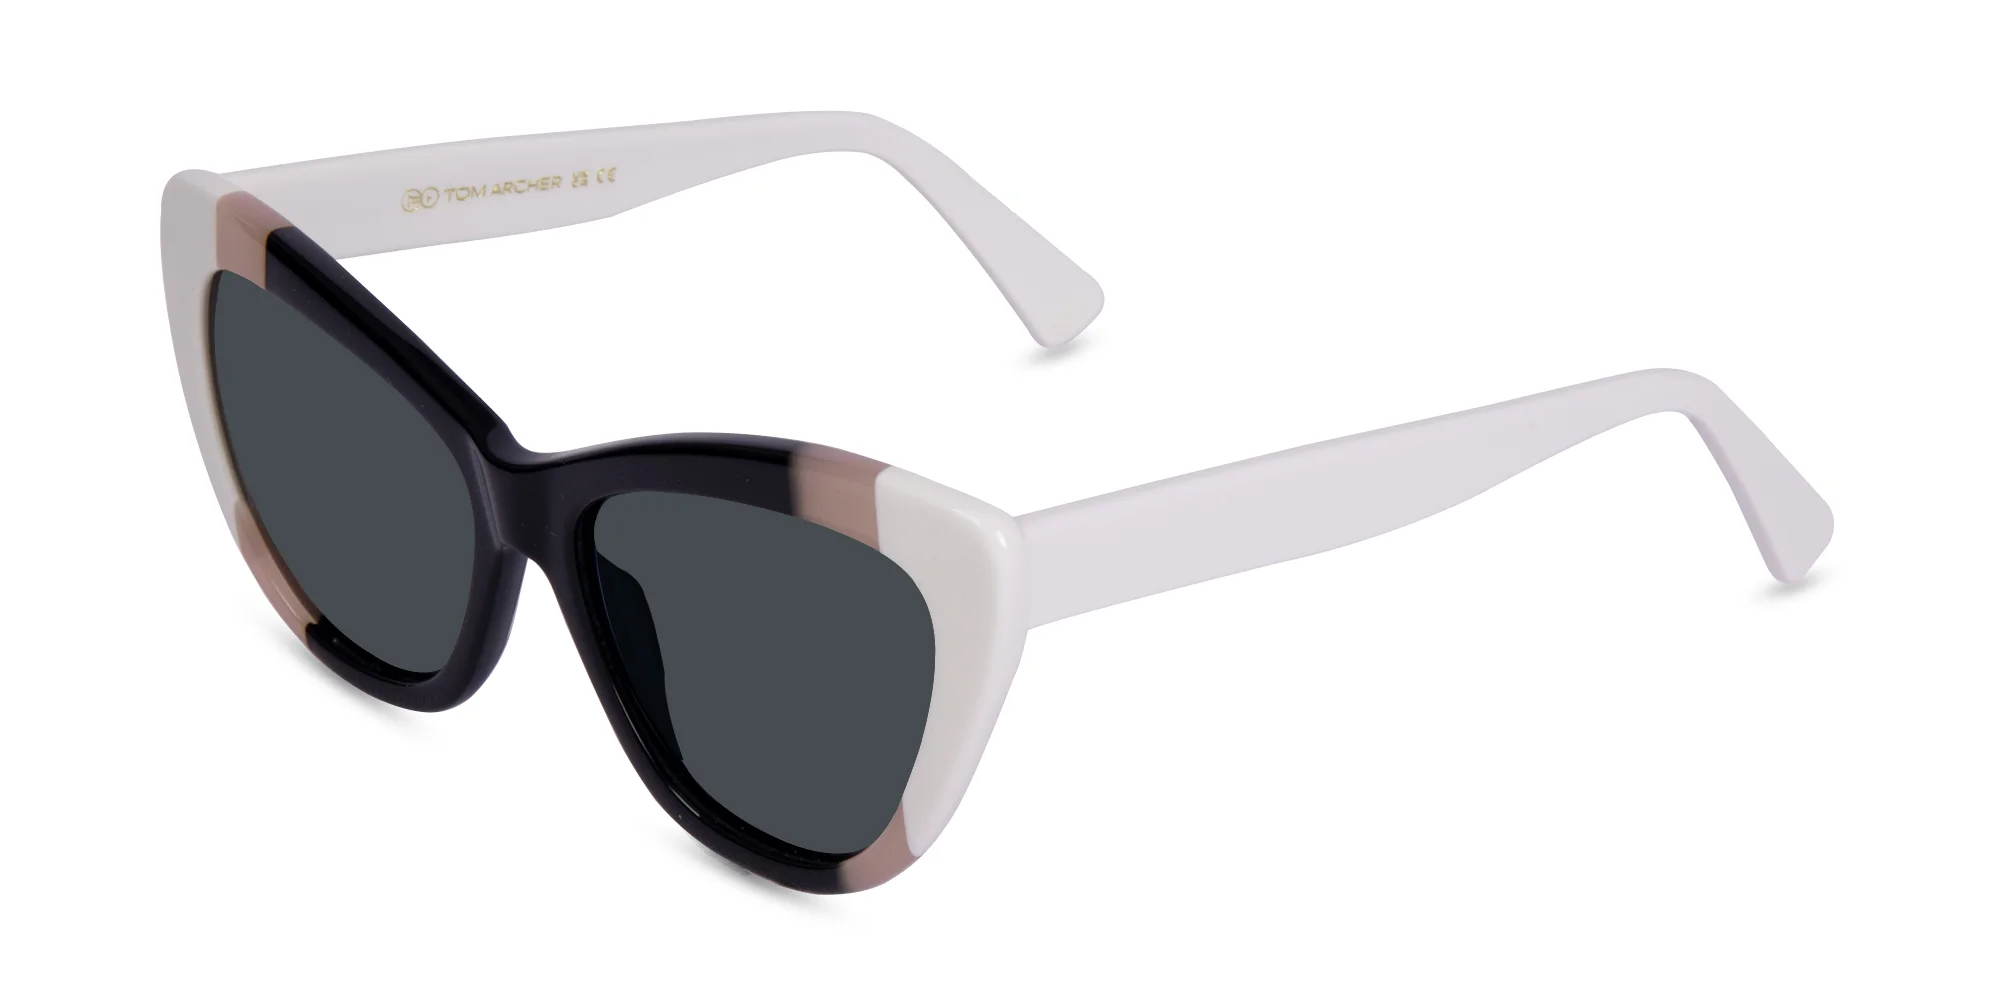 Black And White Sunglasses-1